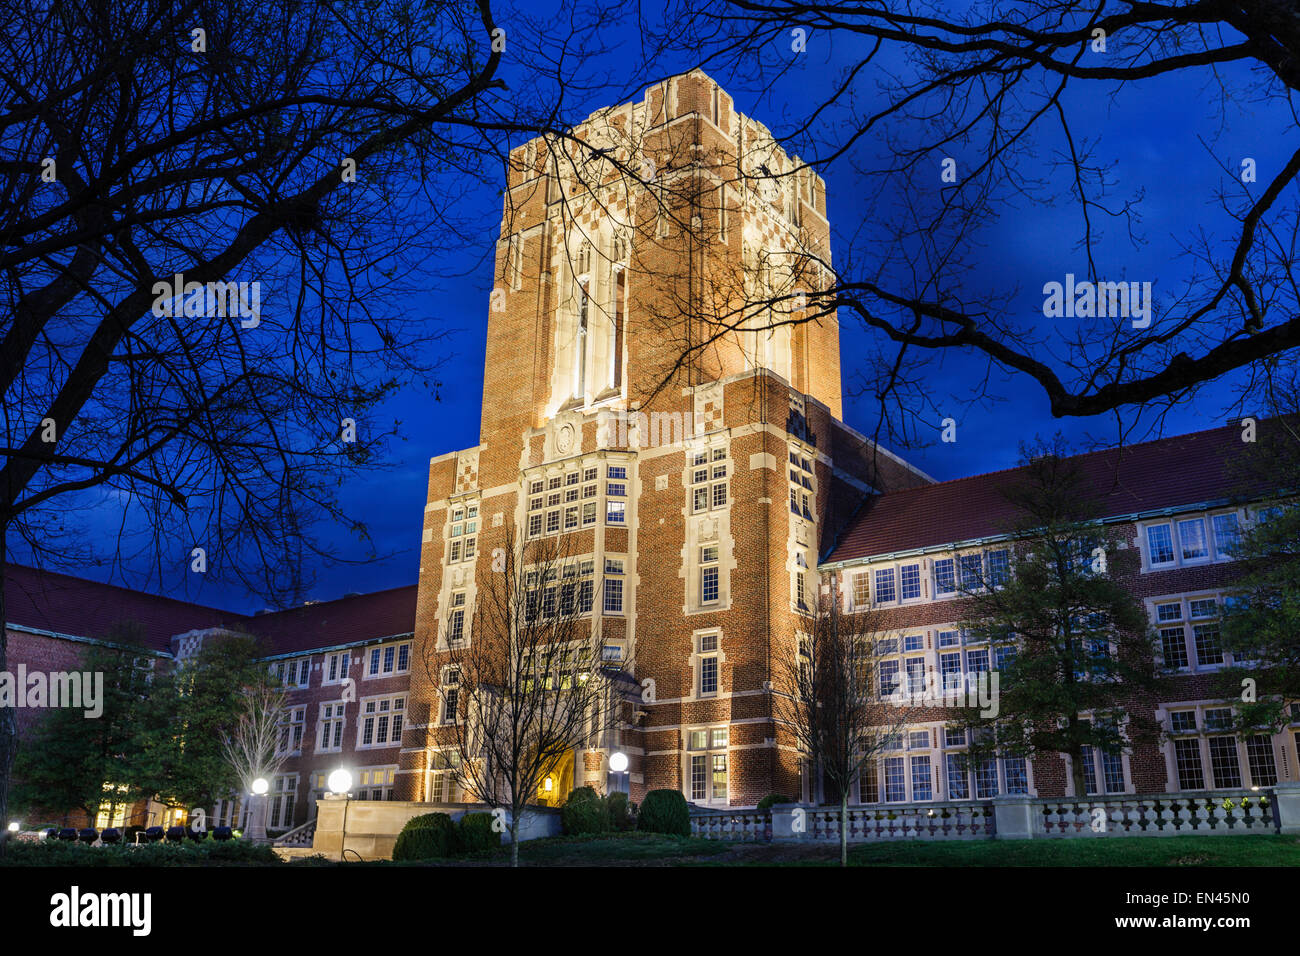 La collina, University of Tennessee Knoxville, Tennessee, Stati Uniti d'America. Foto Stock